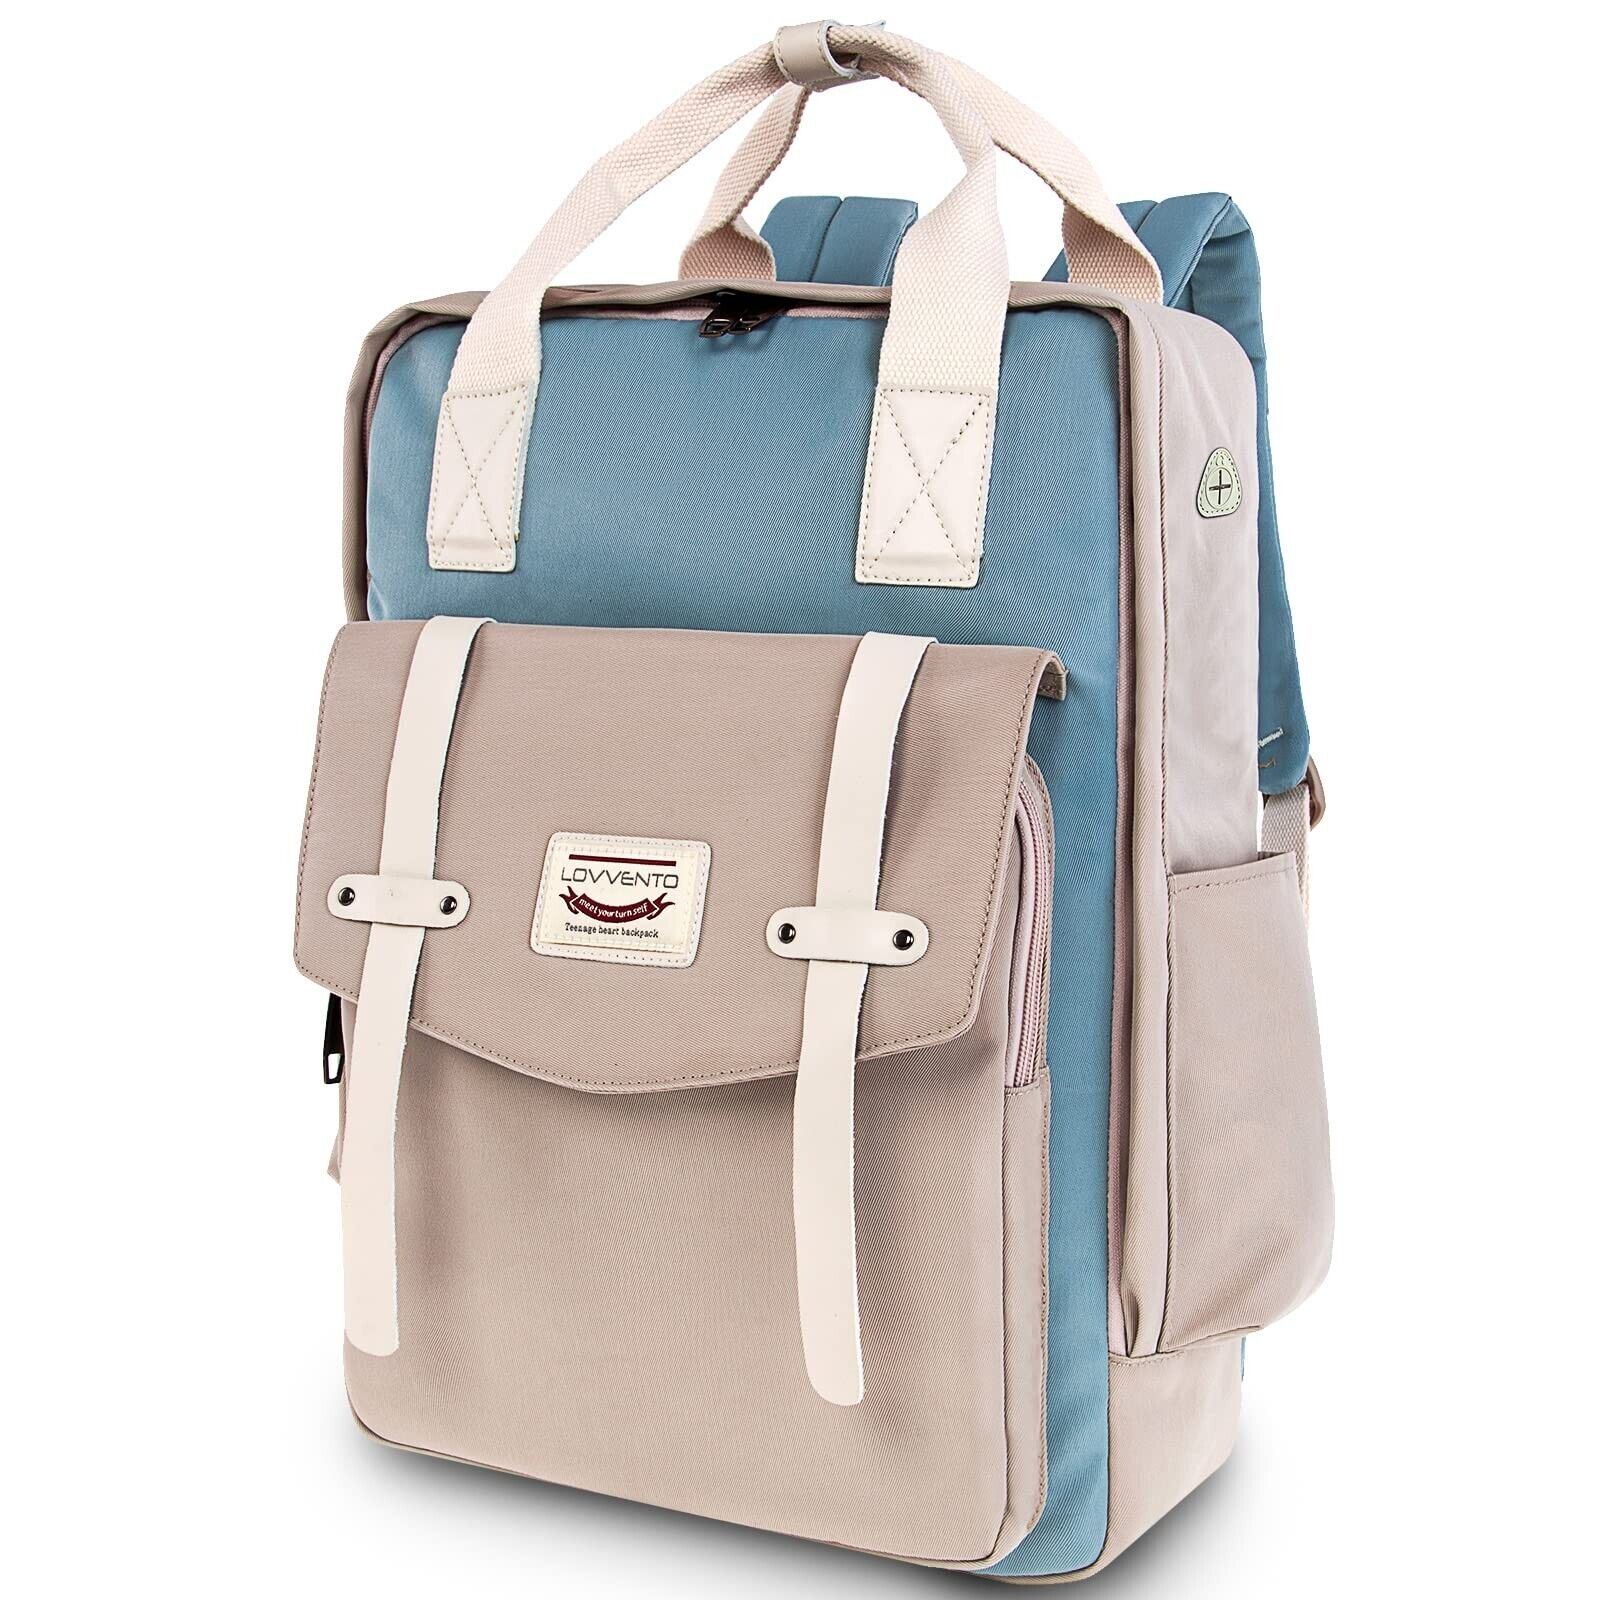 Lovvento 15.6 inch Laptop Japanese Backpack Travel Bag College Lightweight Ca...